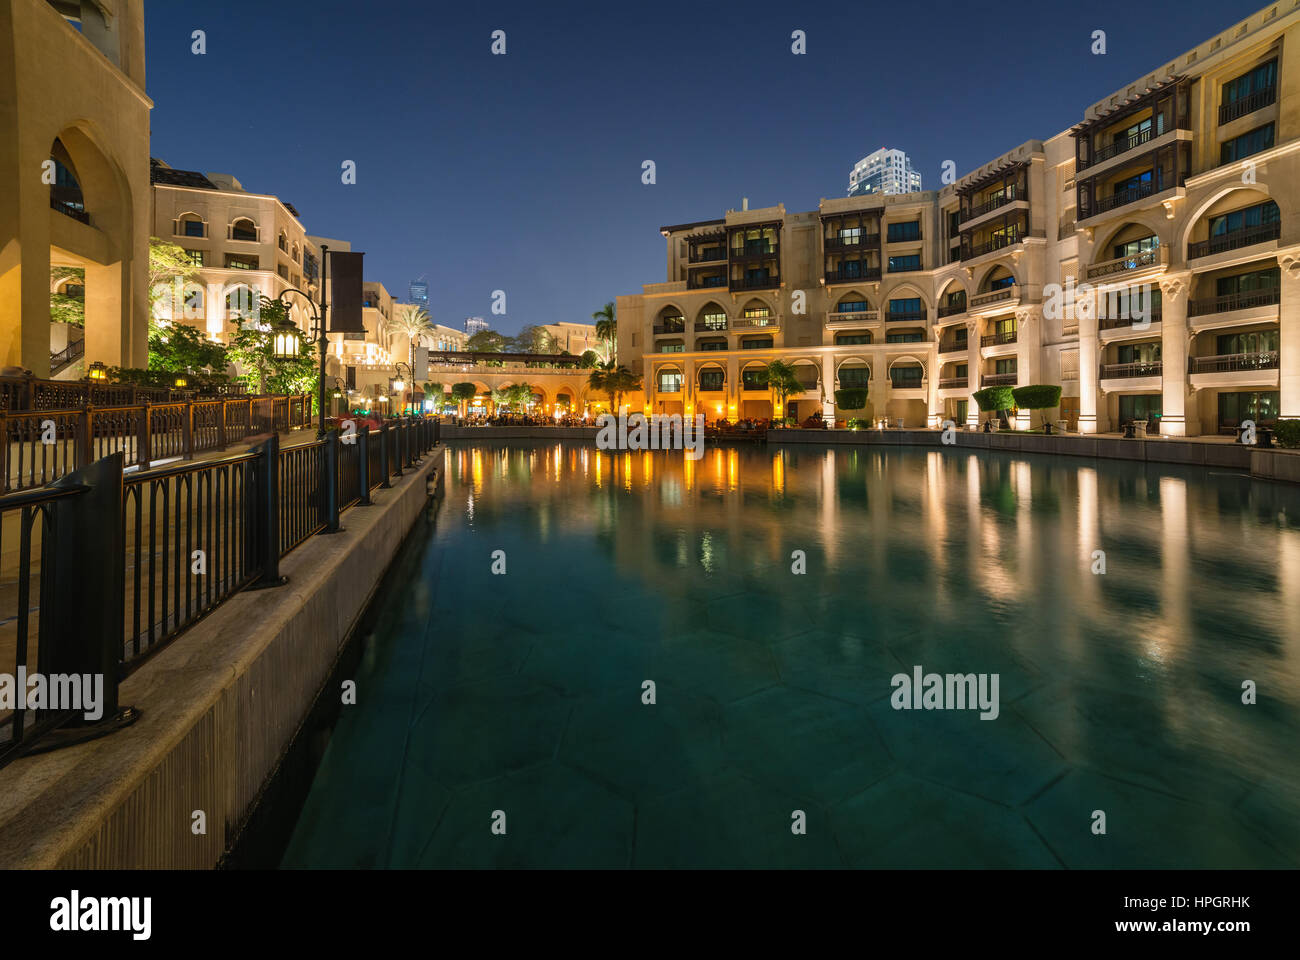 Arabian architecture in Dubai downtown Stock Photo